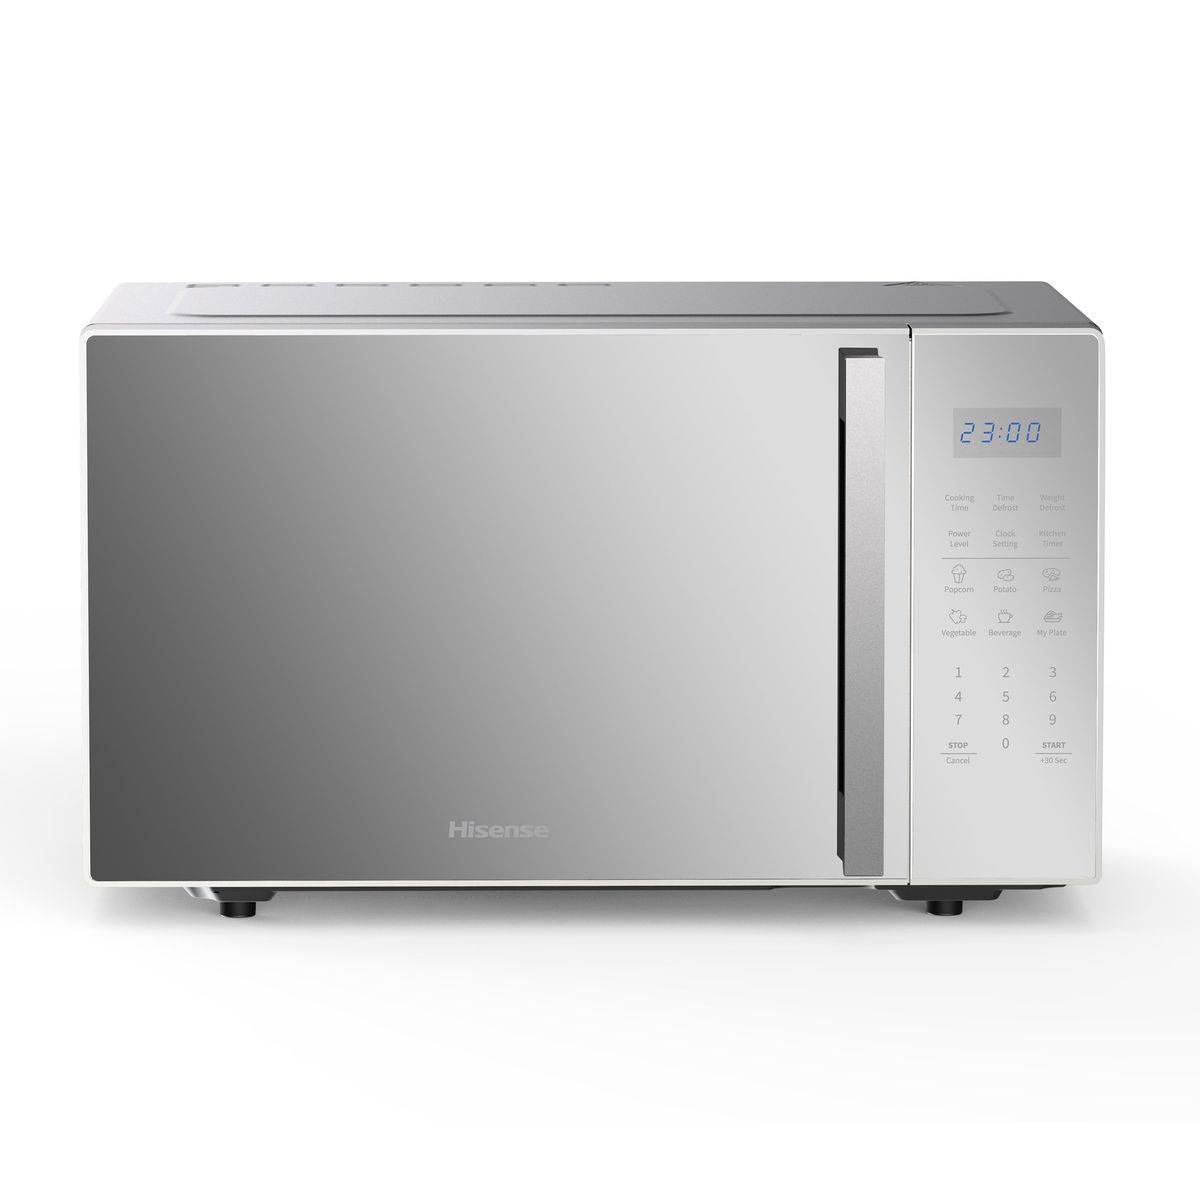 Hisense 30L Electronic Microwave Oven - Mirror